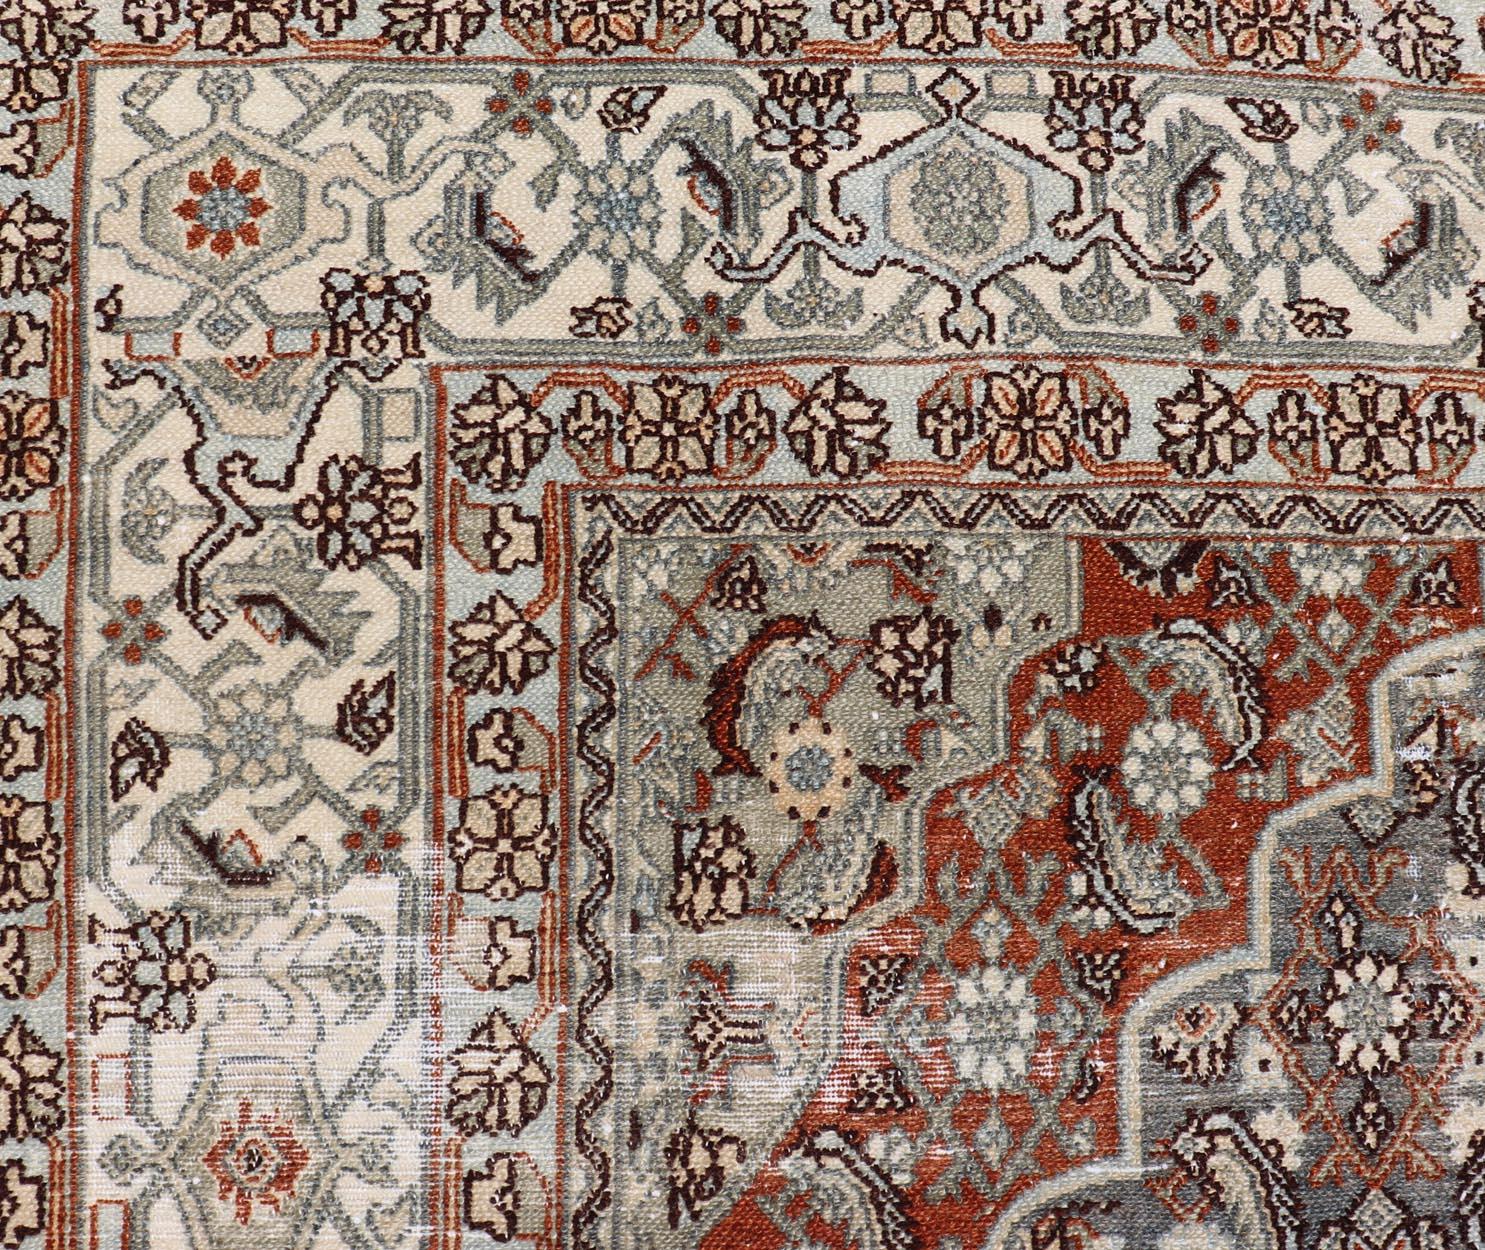 Antique Hamadan gallery rug with medallion and all-over sub-geometric design antique hand-knotted Persian Hamadan rug with Medallion; Keivan Woven Arts/ rug/ R20-1205, country of origin / type: Iran / Hamadan, circa 1920.

Measures: 7'1 x 16'5